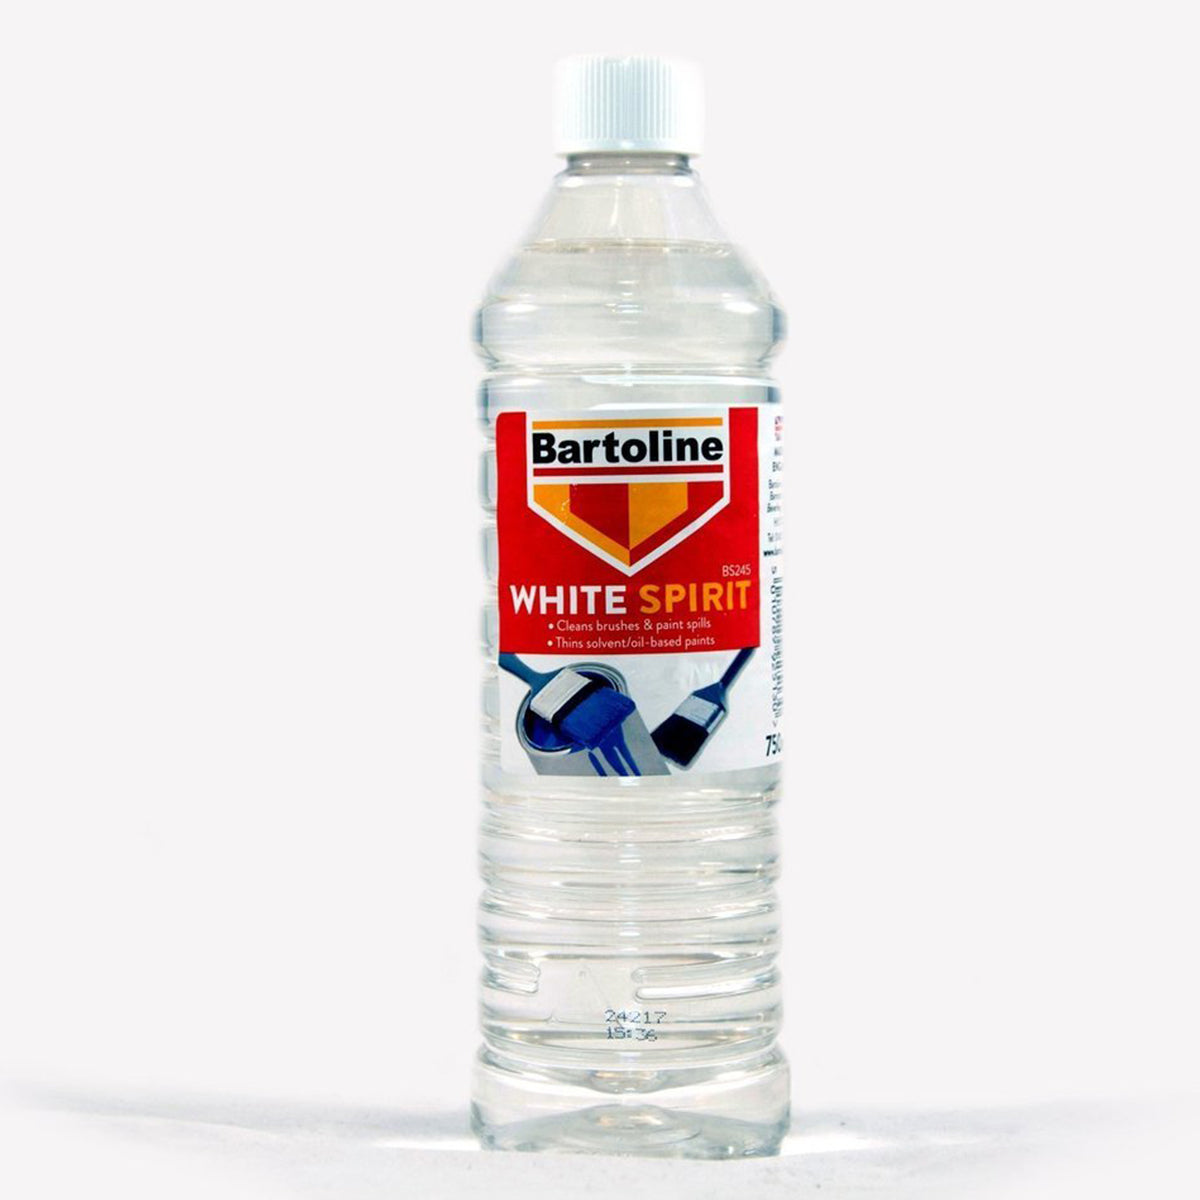 A Bartoline - White Spirit Bottle - 750ml on a white surface.